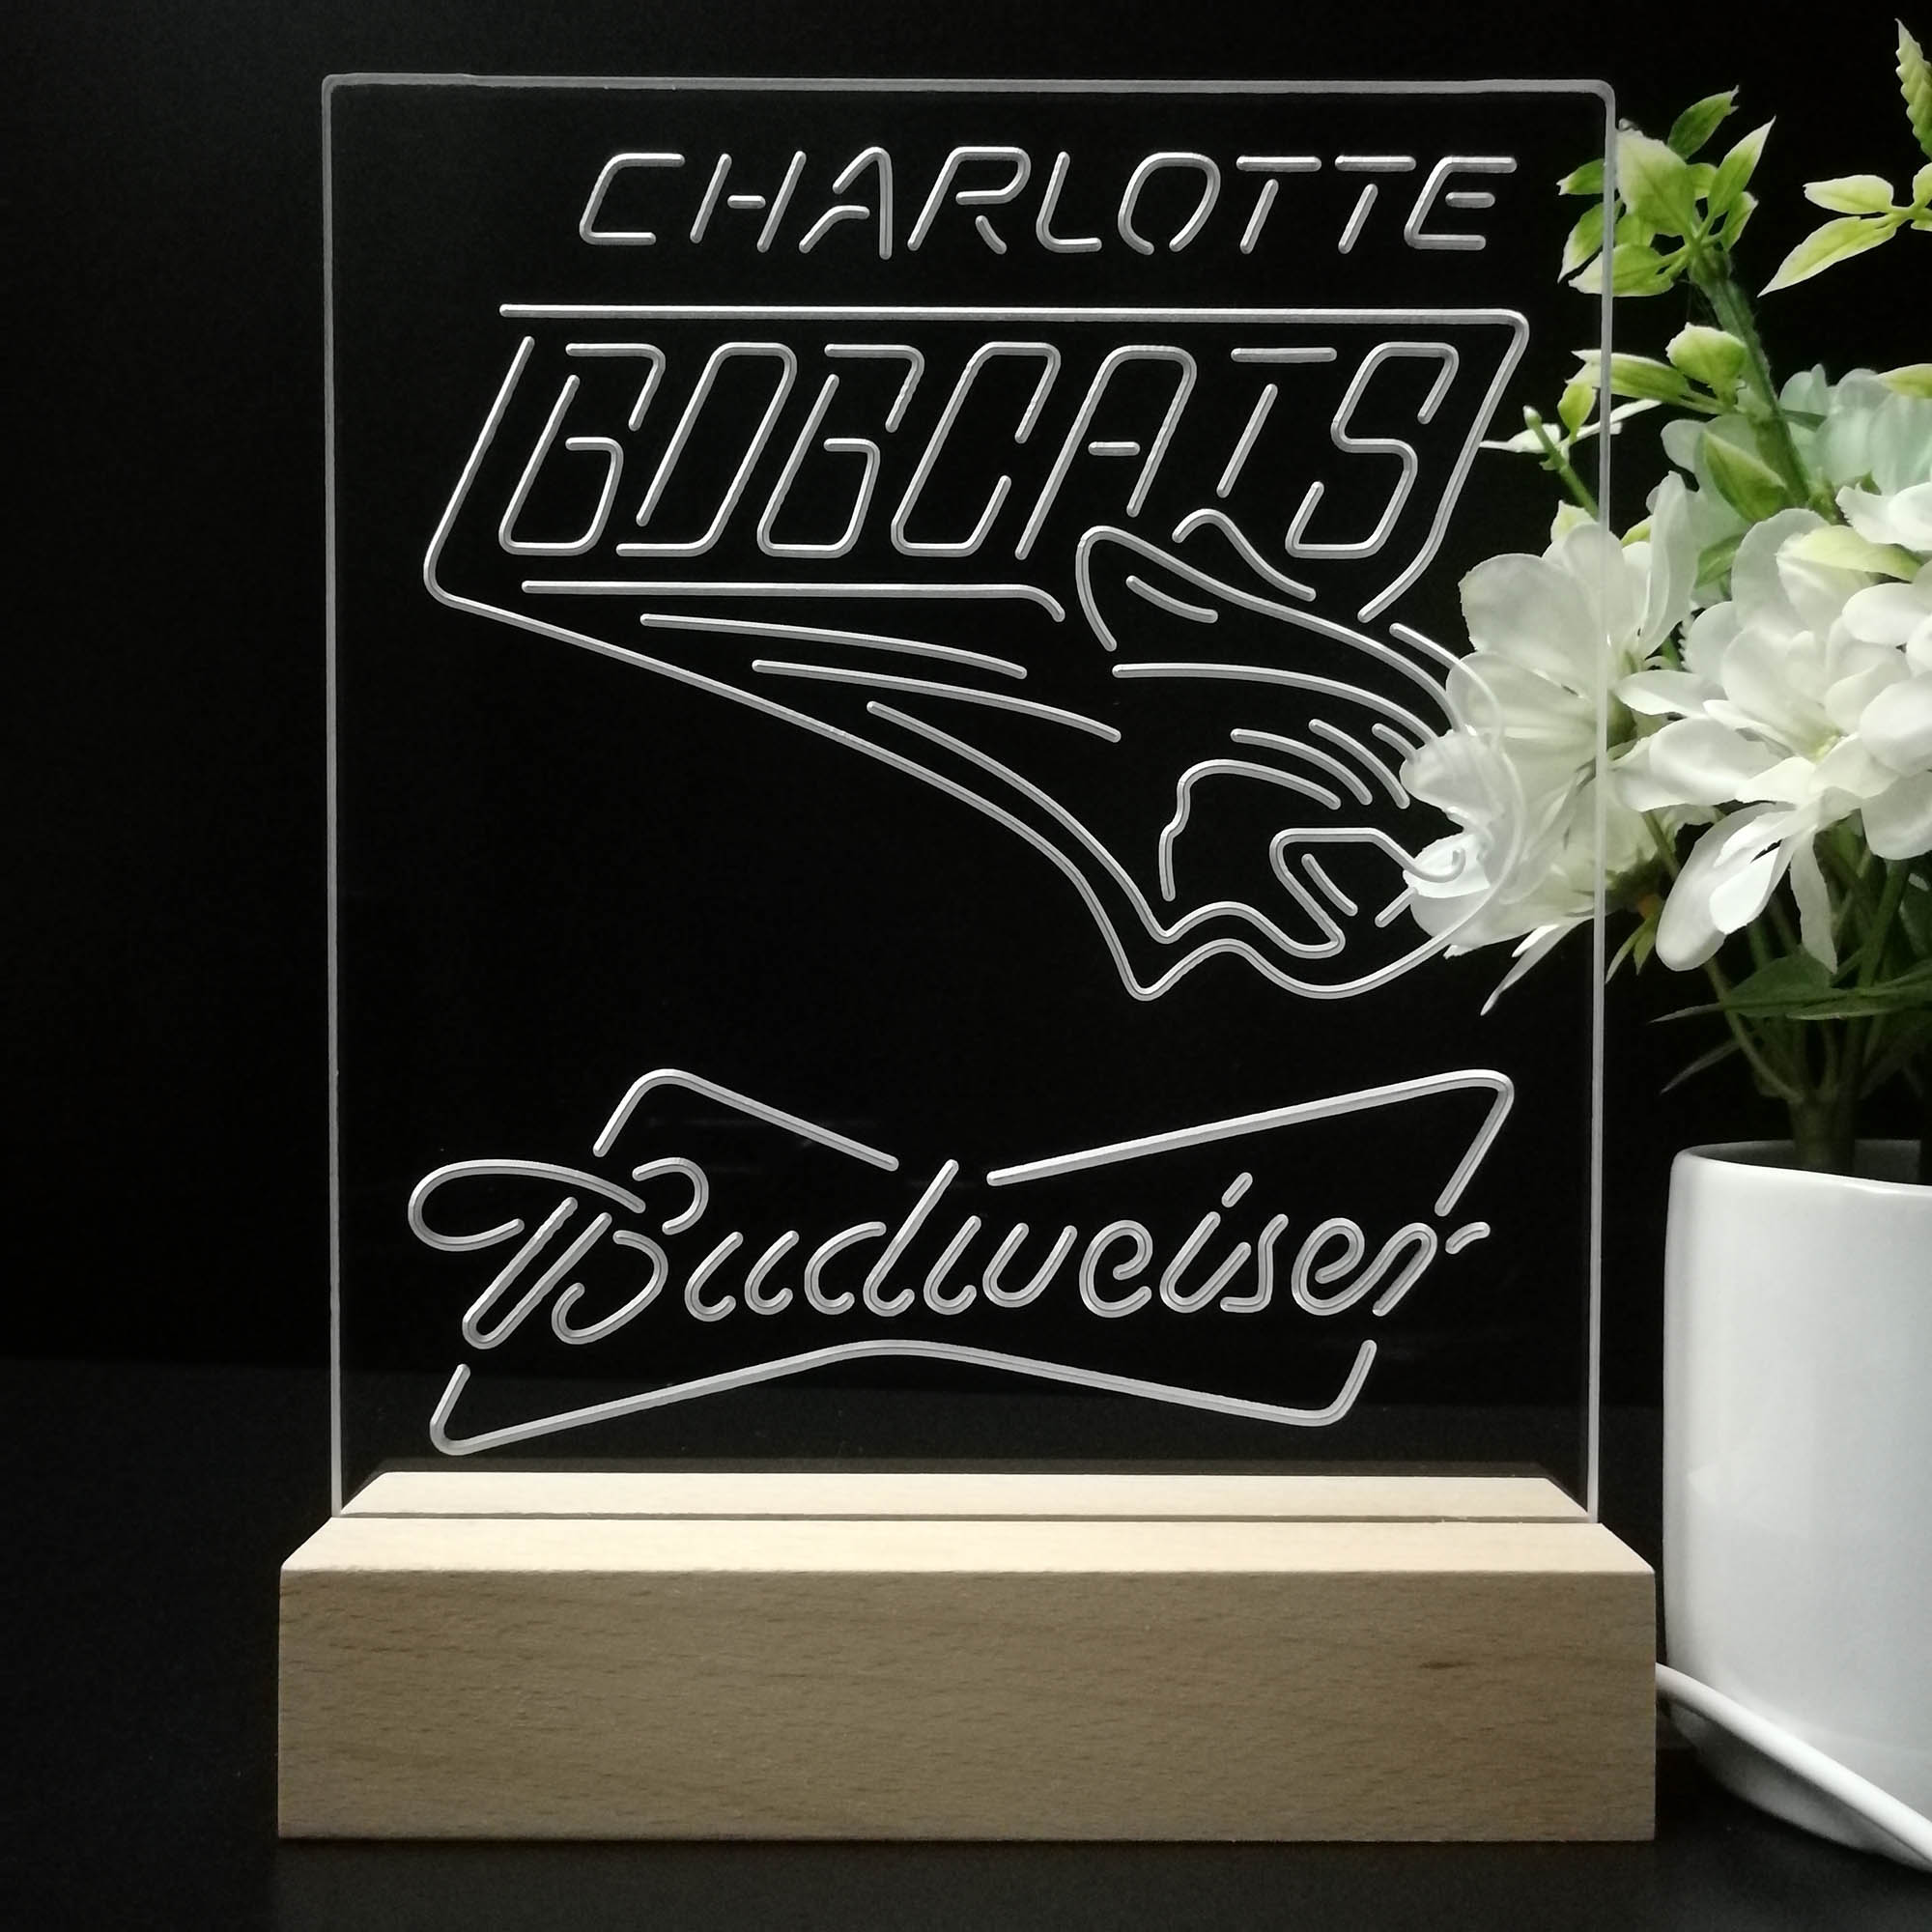 Charlotte Bobcats Budweiser 3D LED Optical Illusion Sport Team Night Light